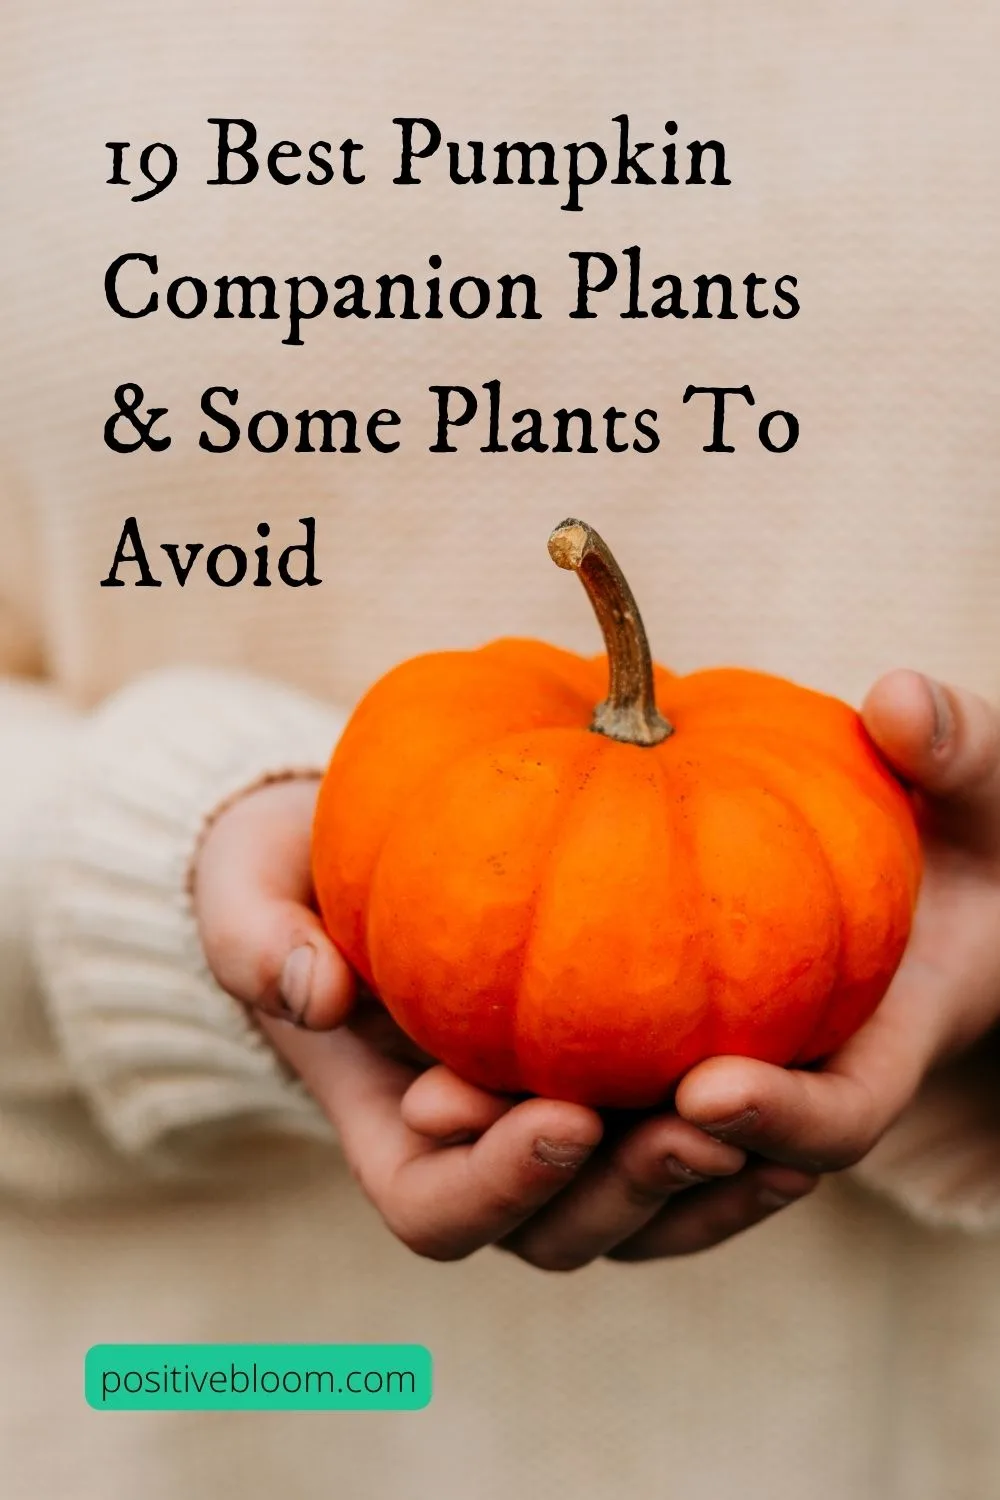 19 Best Pumpkin Companion Plants & Some Plants To Avoid Pinterest